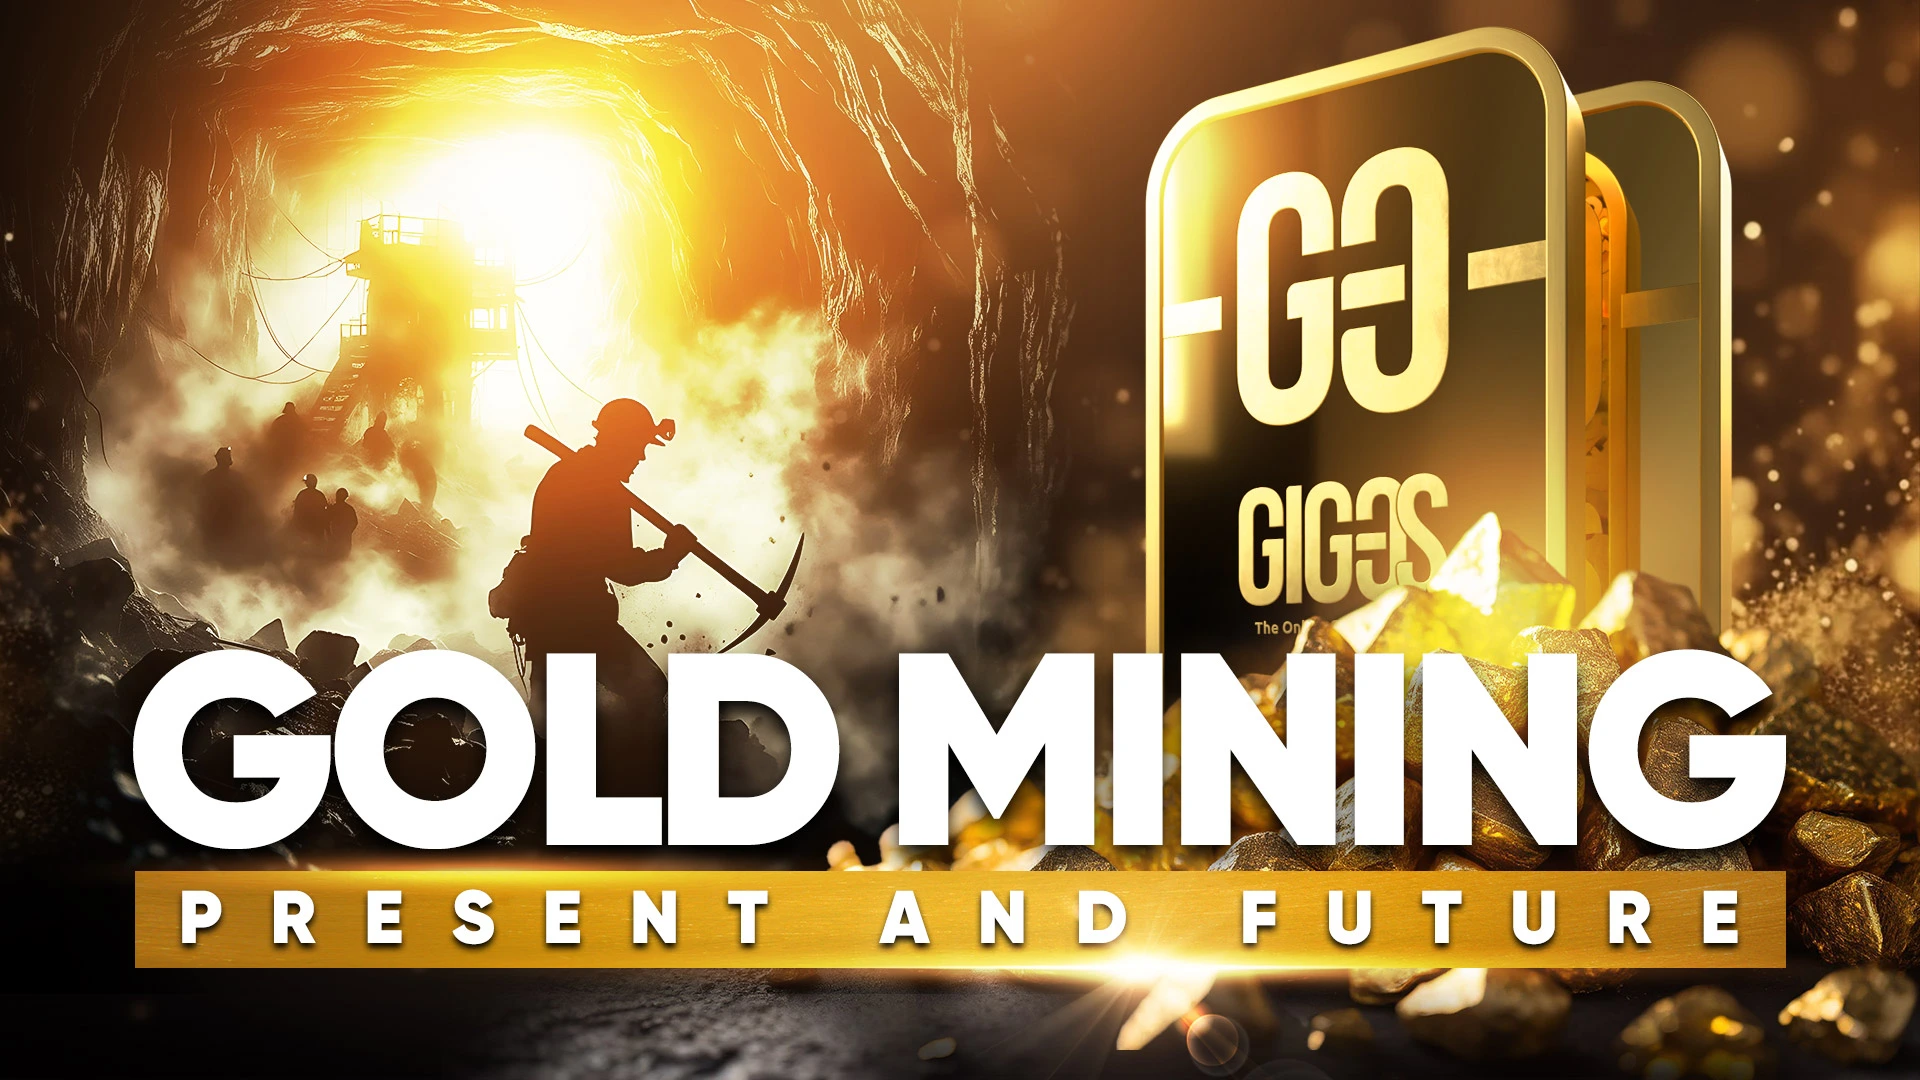 [VIDEO] Secrets of modern gold mining
